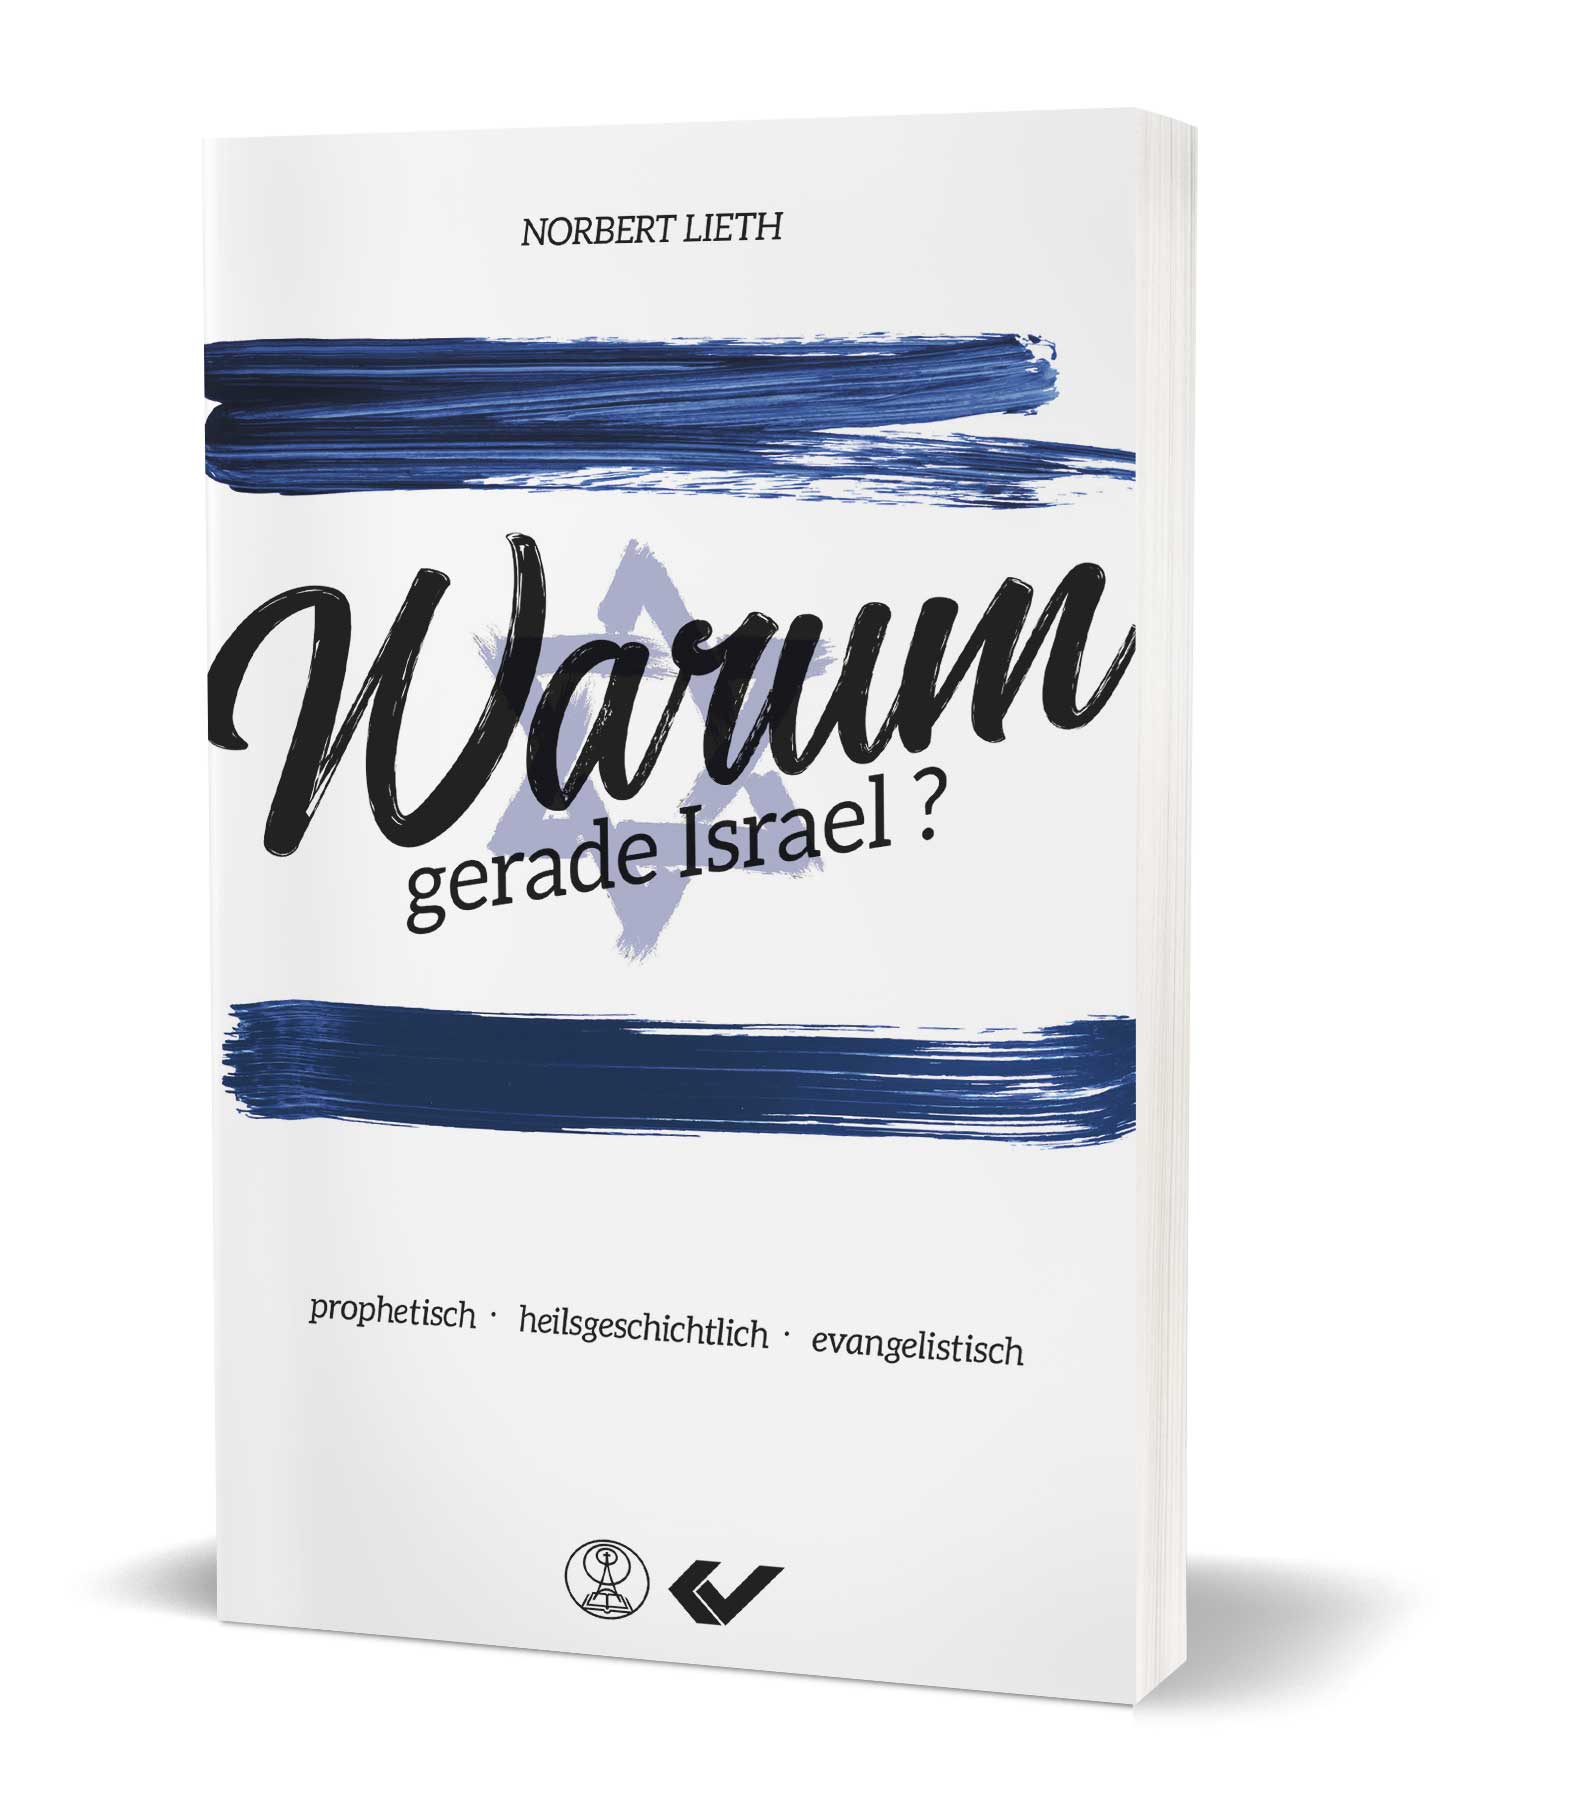 Norbert Lieth: Warum gerade Israel? - prophetisch - heilsgeschichtlich - evangelistisch